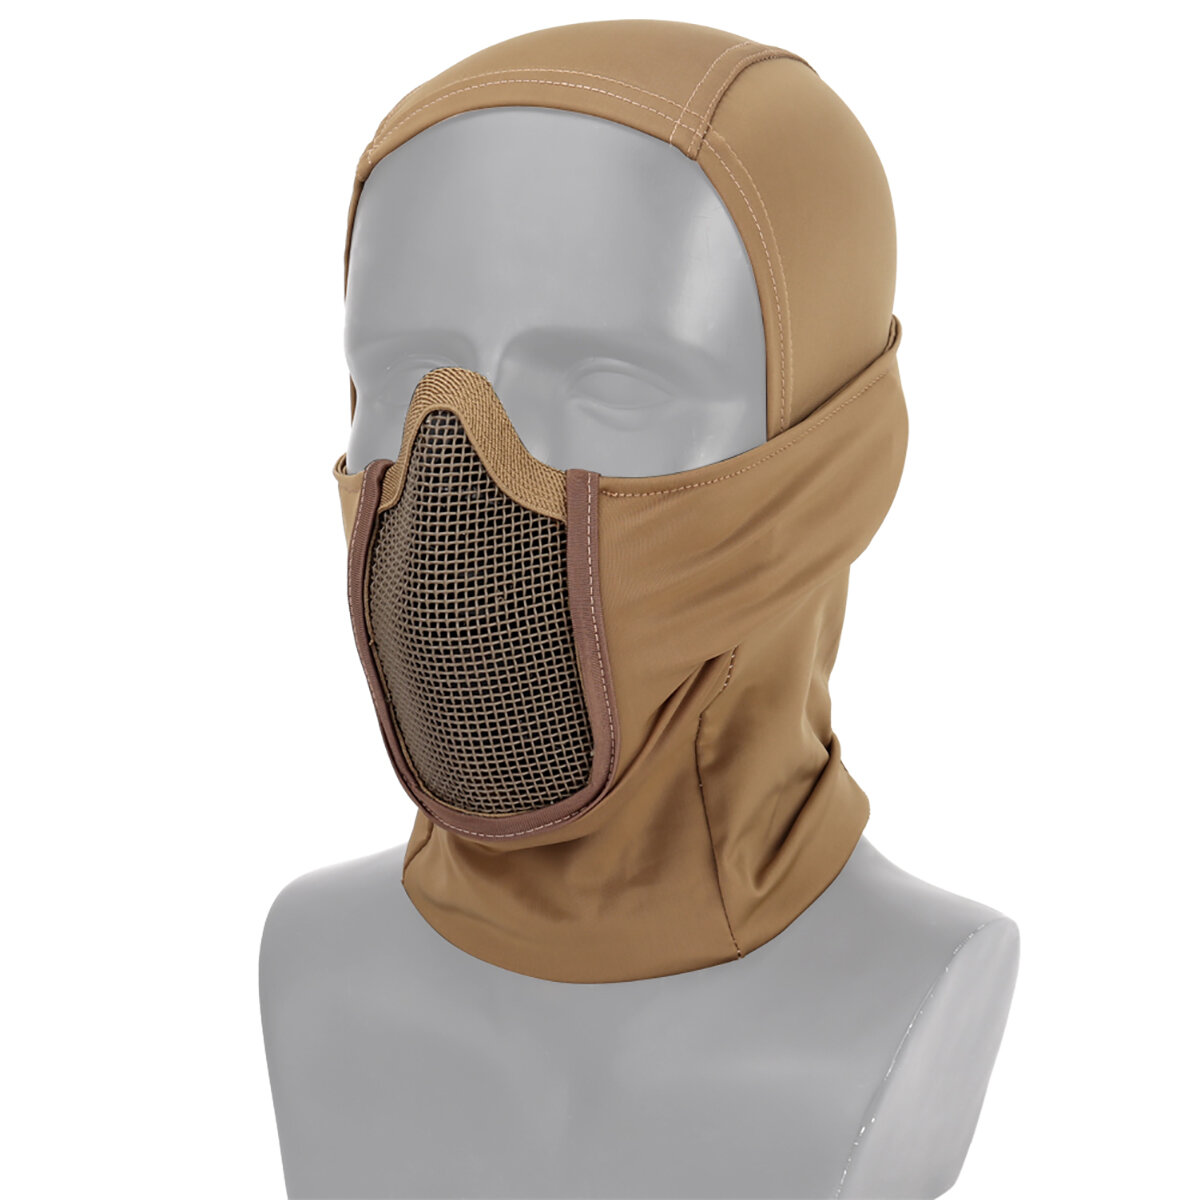 

Balaclava Mesh Mask Tactical Gear Full Face Neck Airsoft CS Hunting Cycling Hood